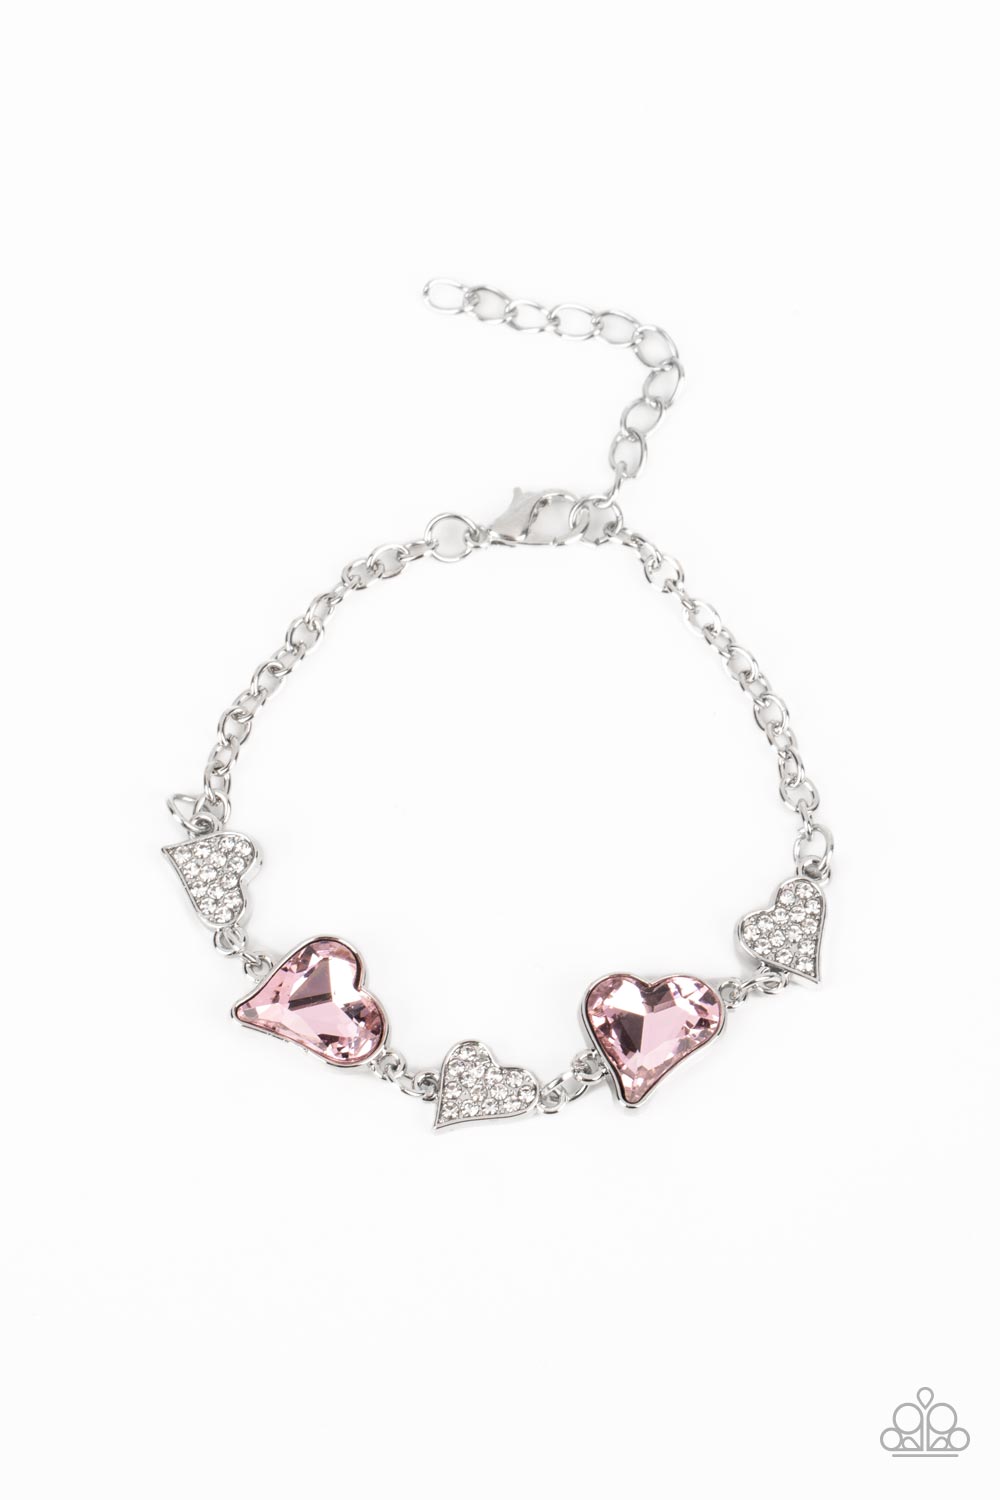 Pink Crandy Crush Bracelet – Jewel Candy